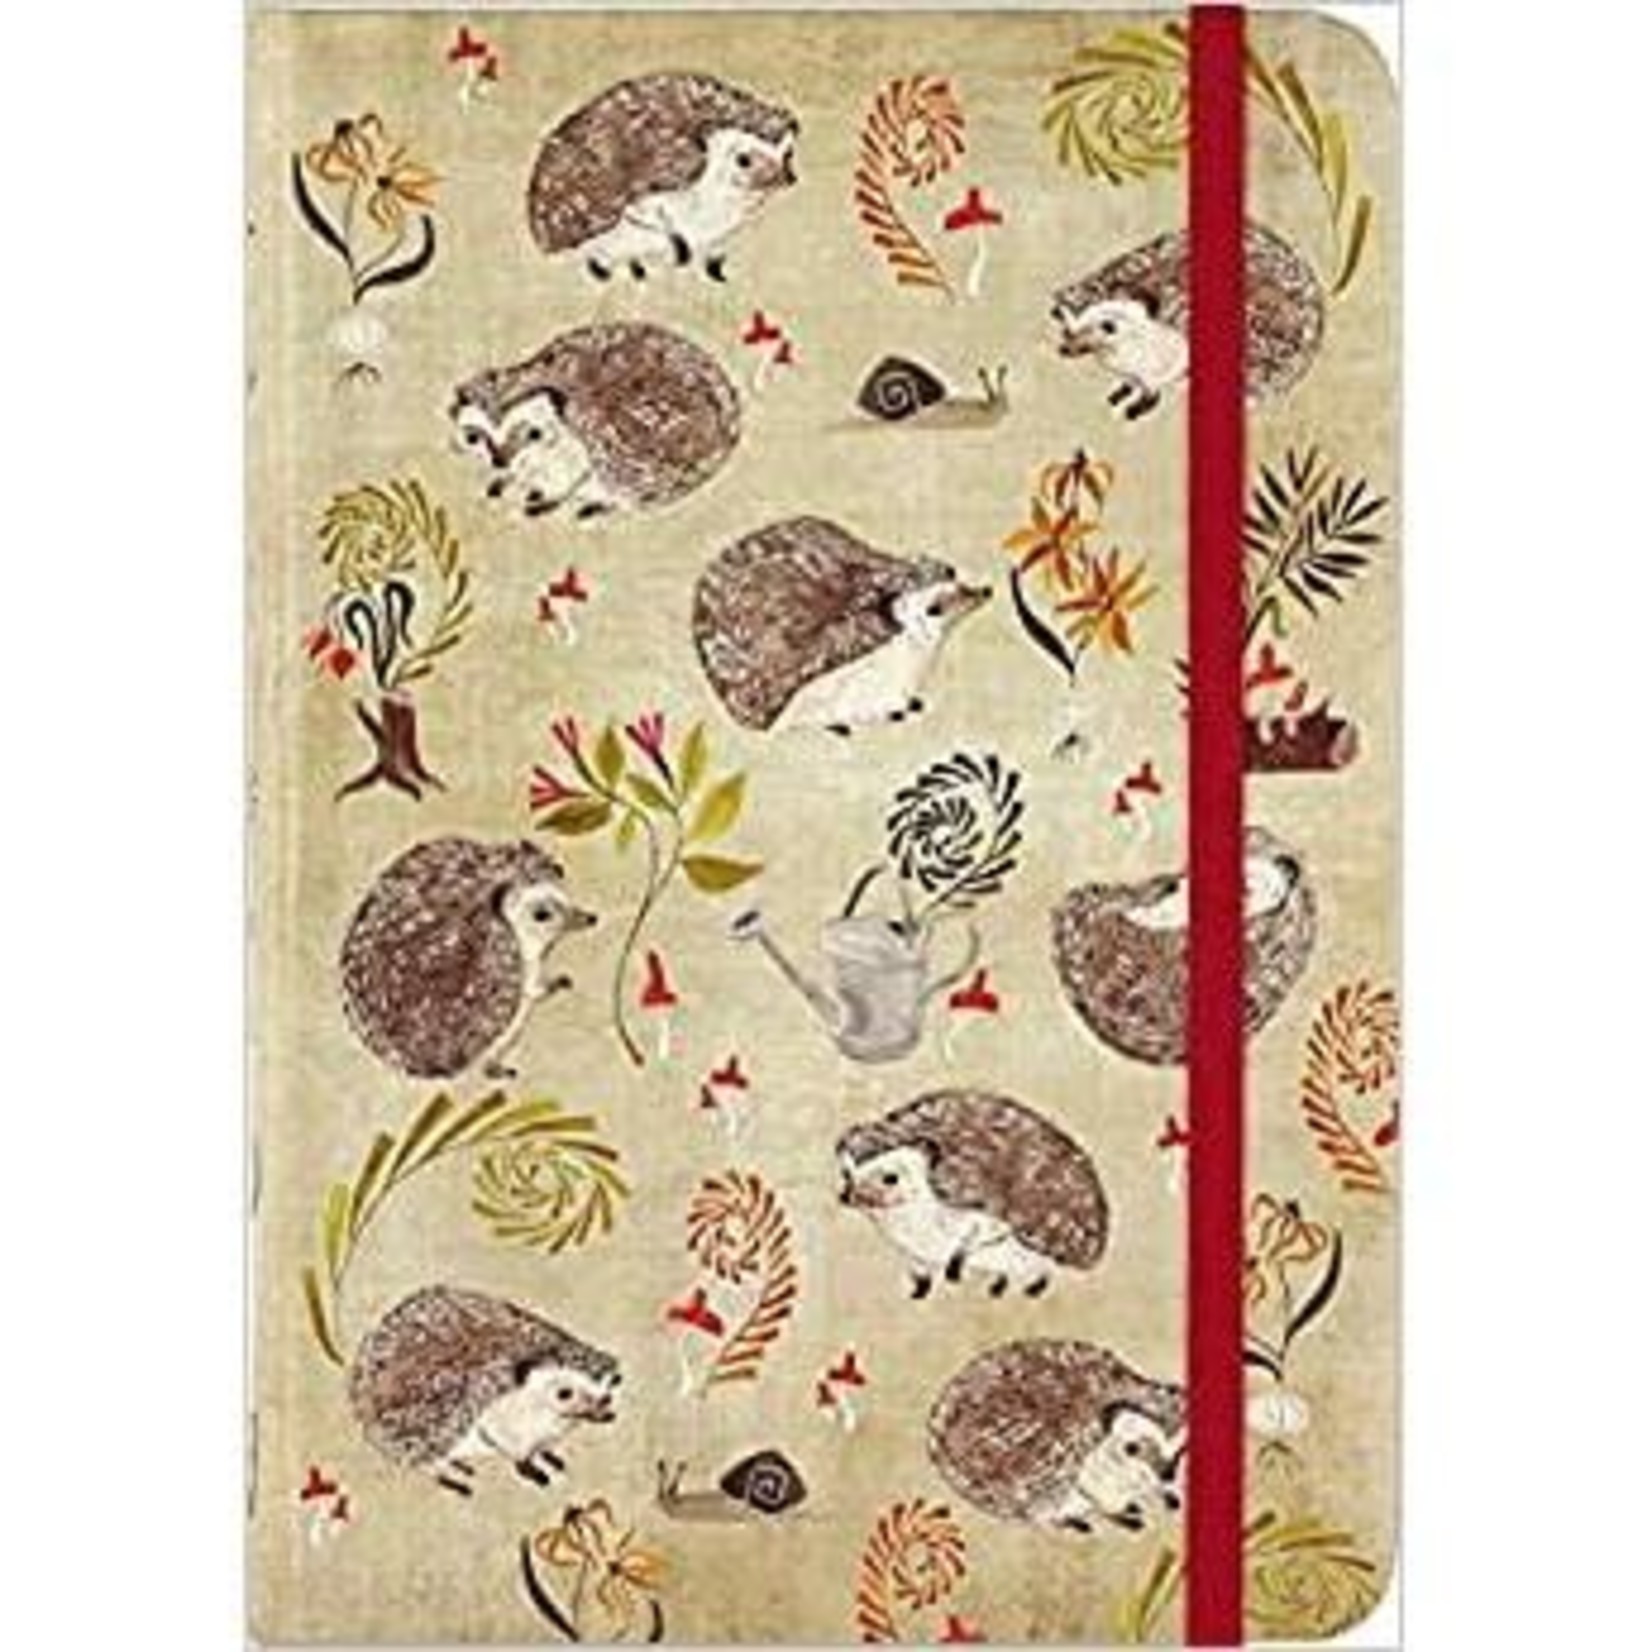 Hedgehogs Journal / Diary / Notebook